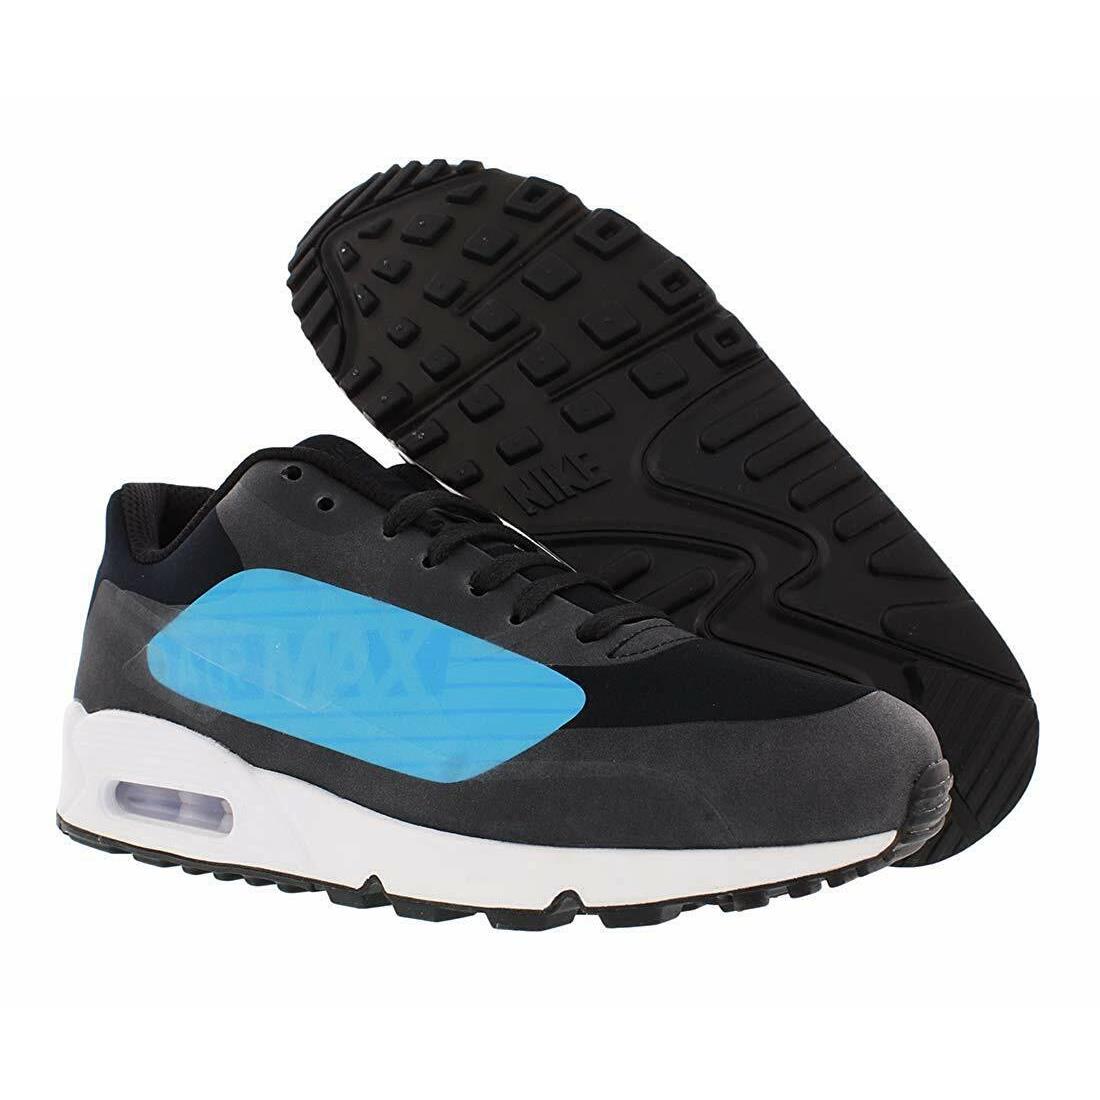 Nike Air Max 90 Ns Gpx Mens Running Shoes AJ7182 002 Retail Size 11.5